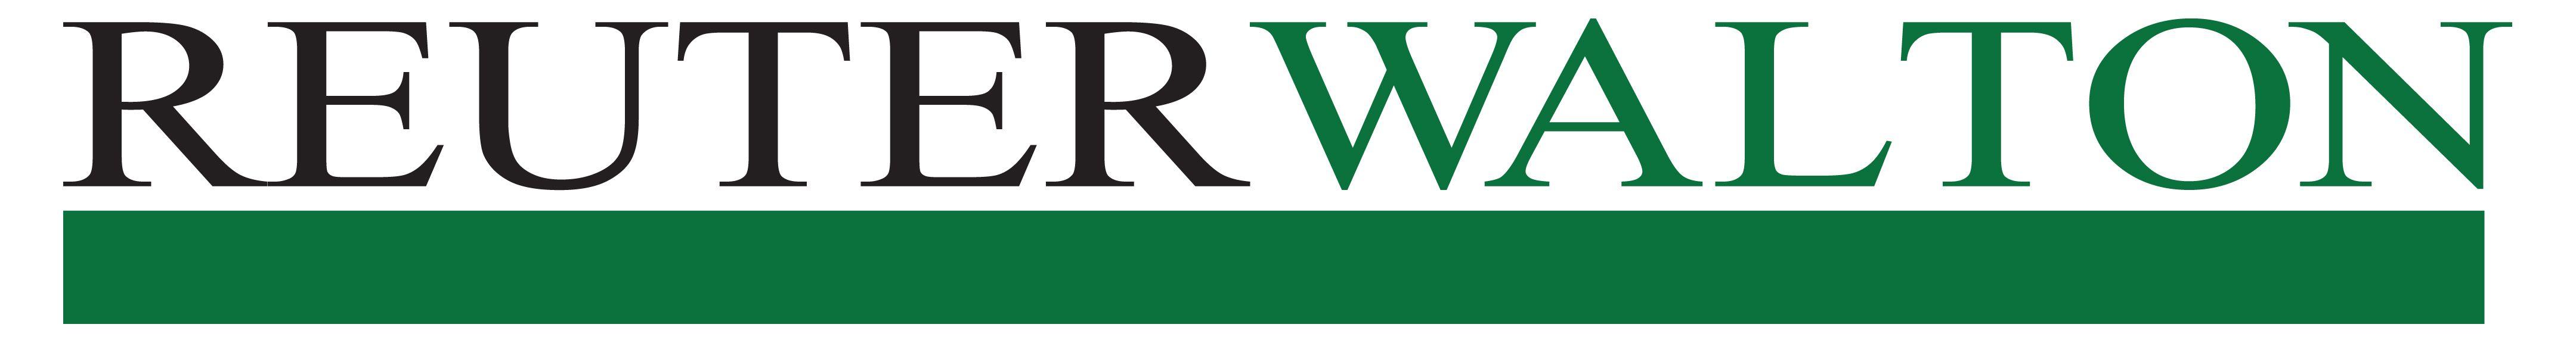 Walton Logo - Minnesota Residential and Commercial Construction - Reuter Walton